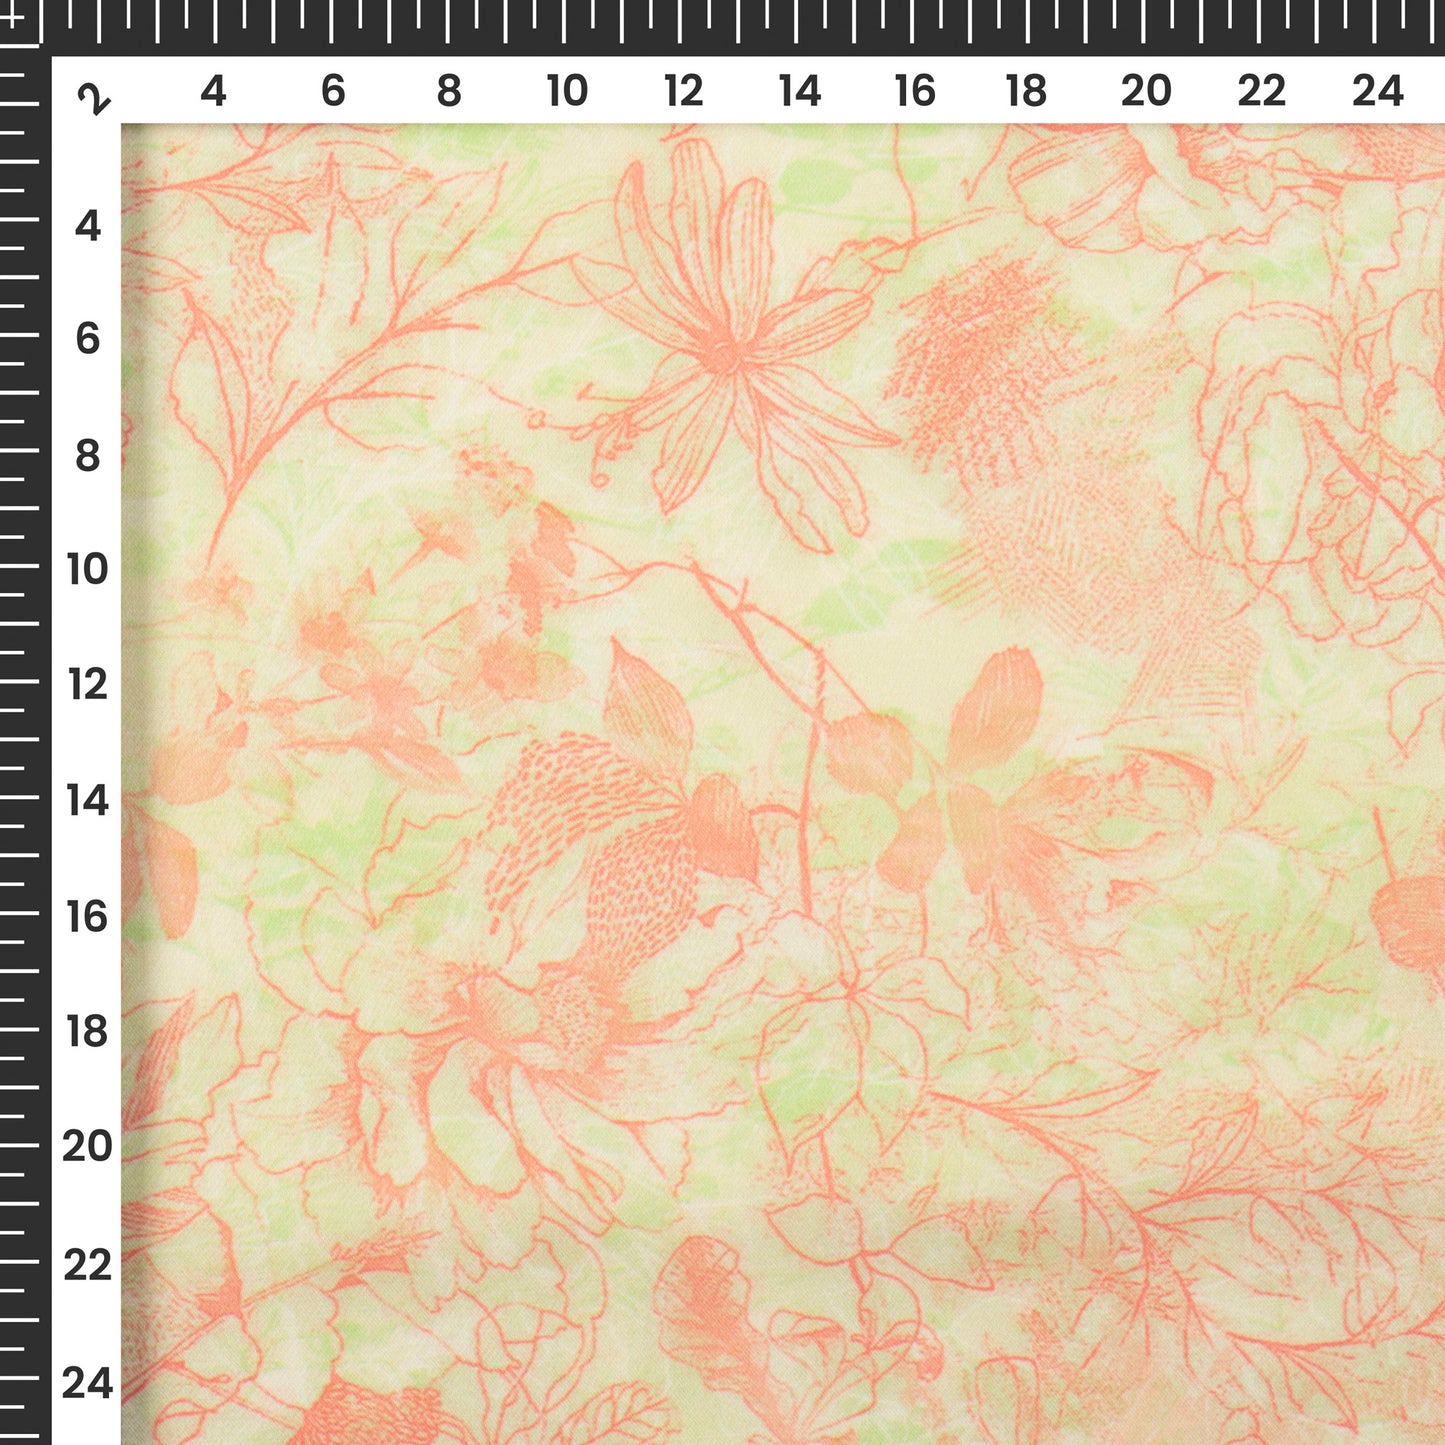 Peach Pink Floral Digital Print Modal Satin Fabric